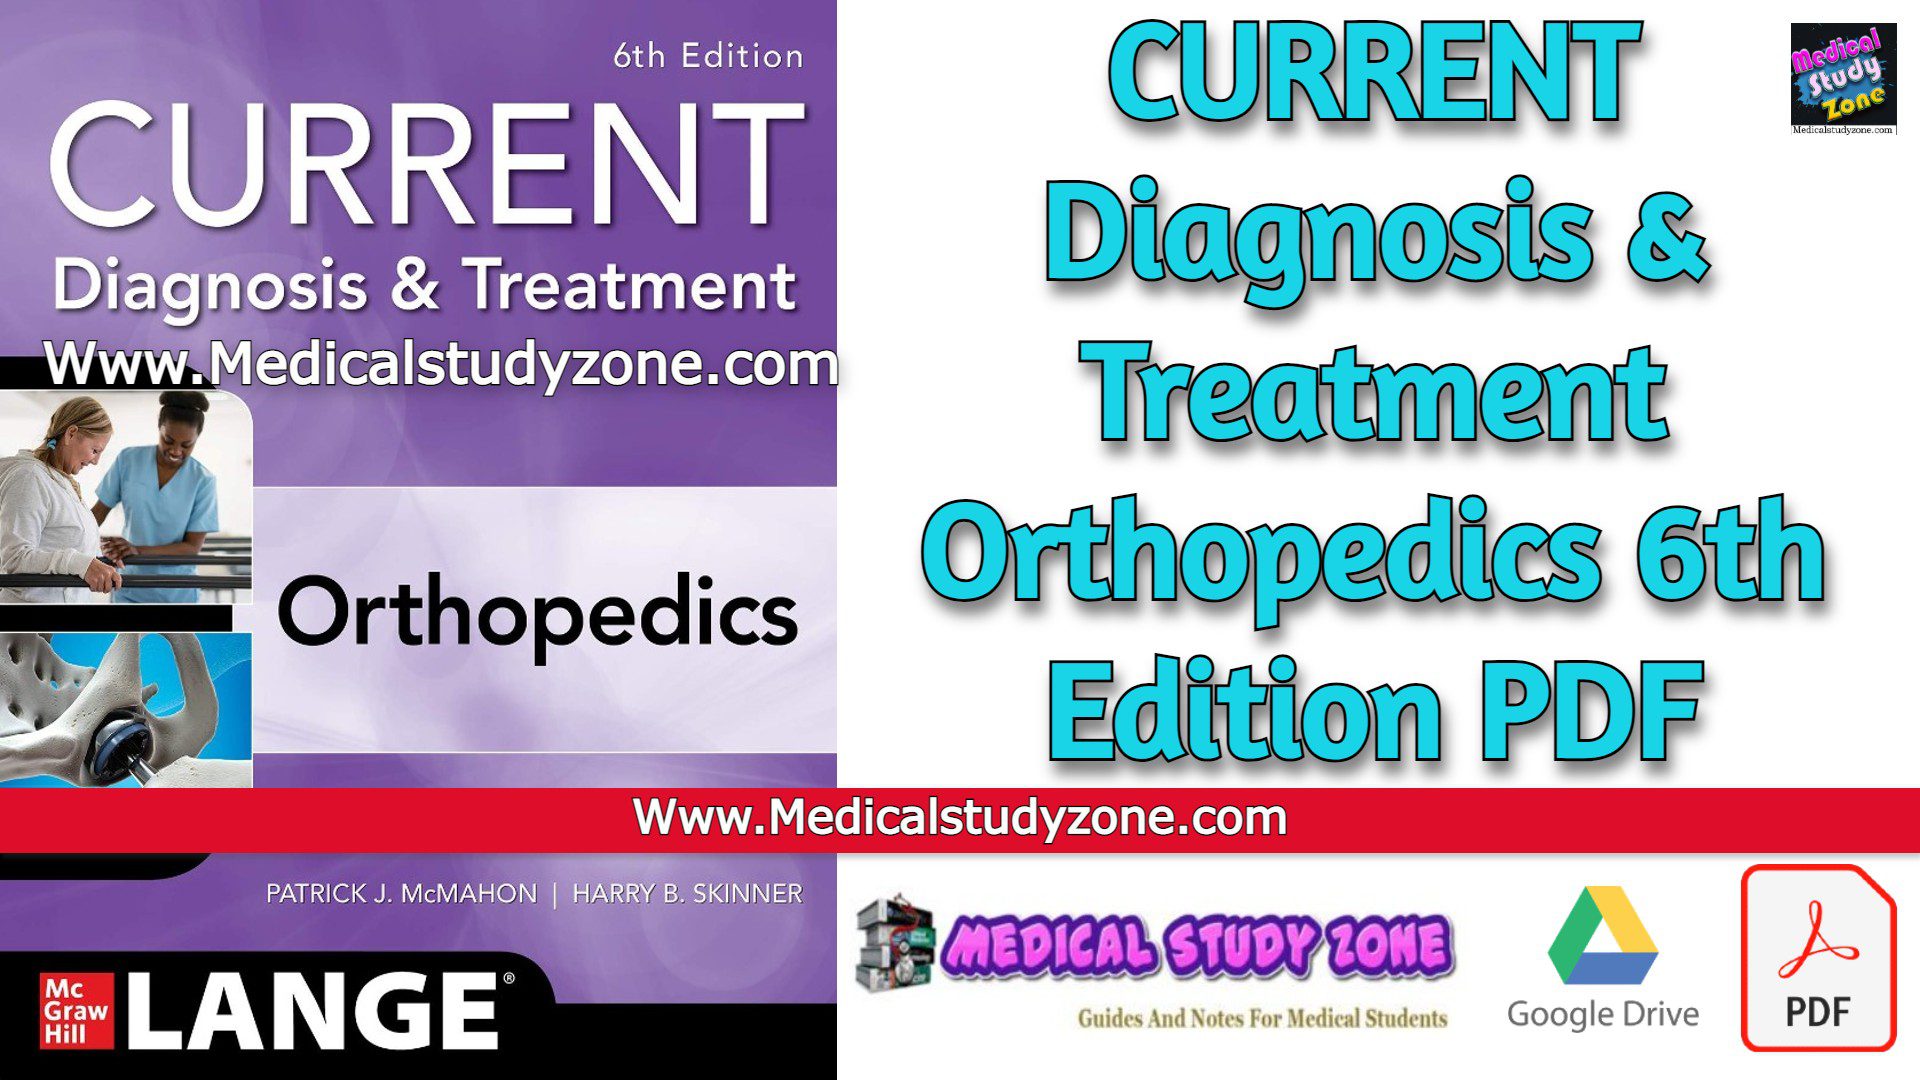 CURRENT Diagnosis & Treatment Orthopedics 6th Edition PDF Free Download